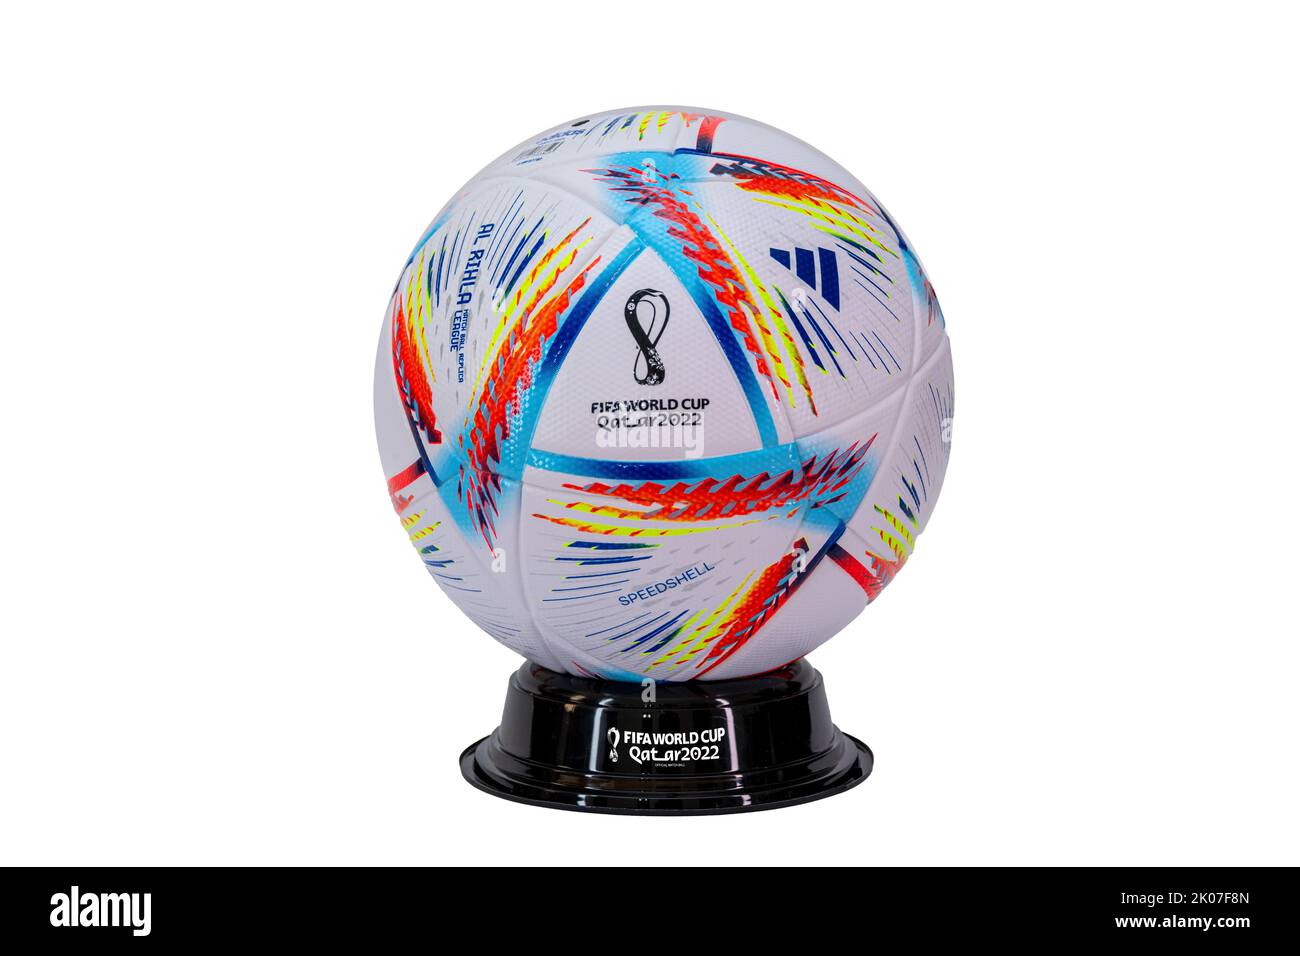 FIFA Qatar Football World cup Official Match Ball Al Rihla by adidas Stock Photo